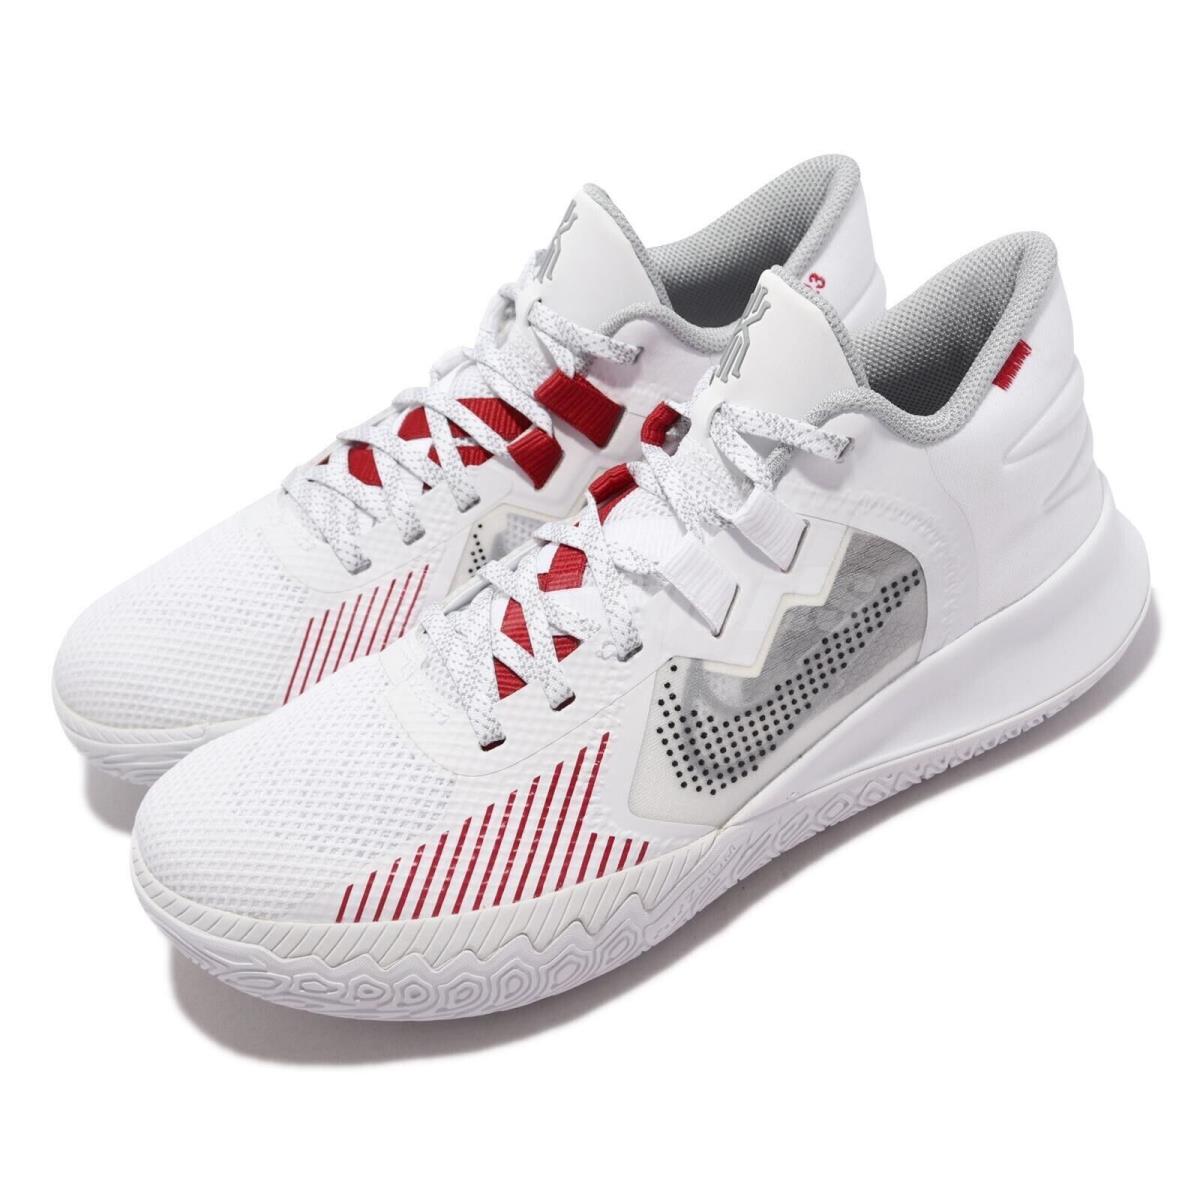 Nike Kyrie Flytrap V 5 White Red Mens Size 9.5 12 13 Basketball Shoes CZ4100-100